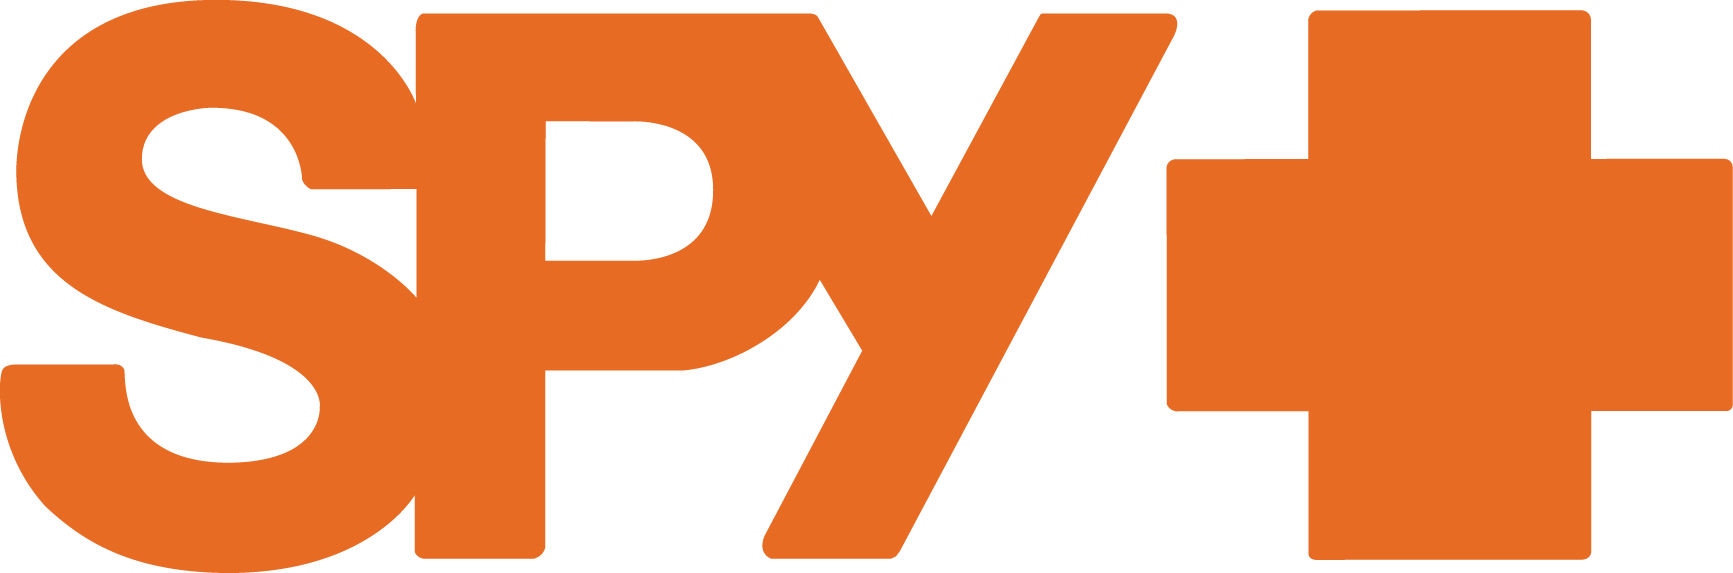 Spy Logo - Spy Logo (Optic) Vector Free Download